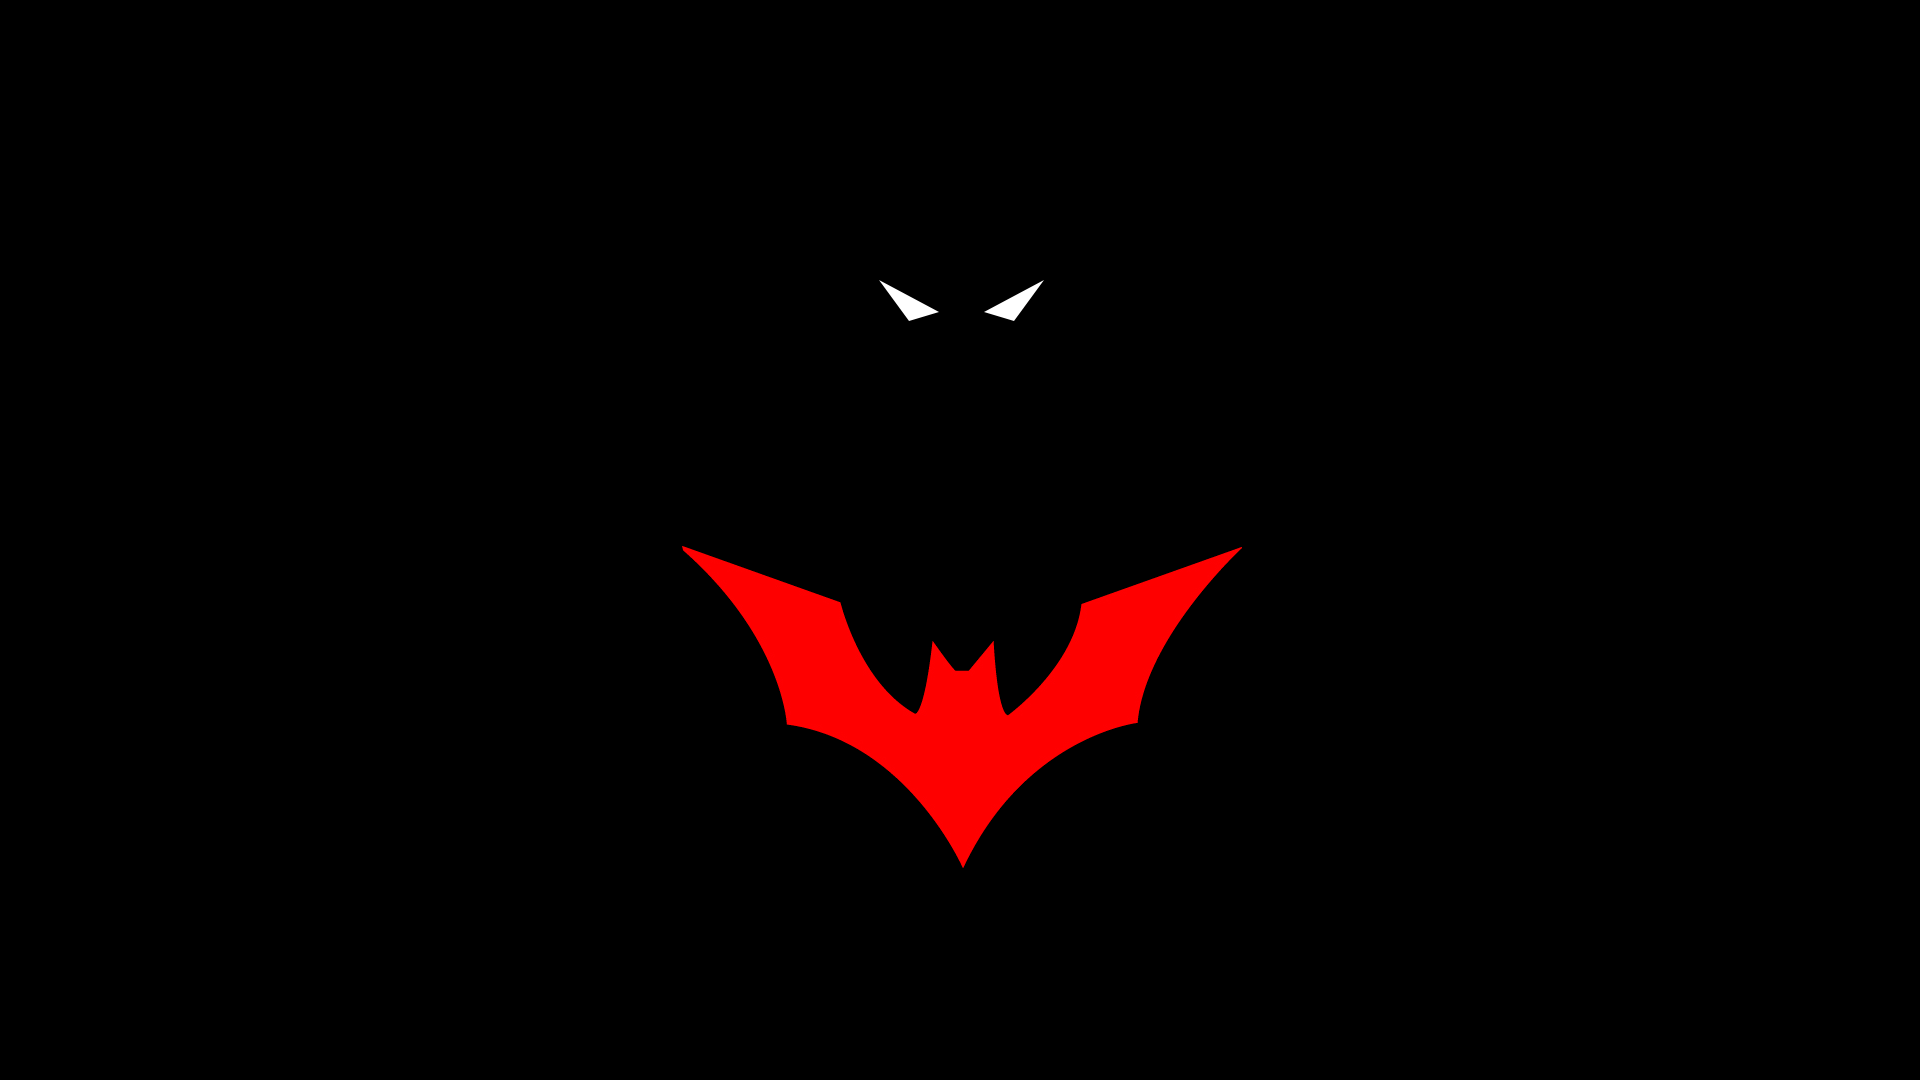 Black and Red Batman Logo - batman logo wallpaper - Google Search | #Super_heros